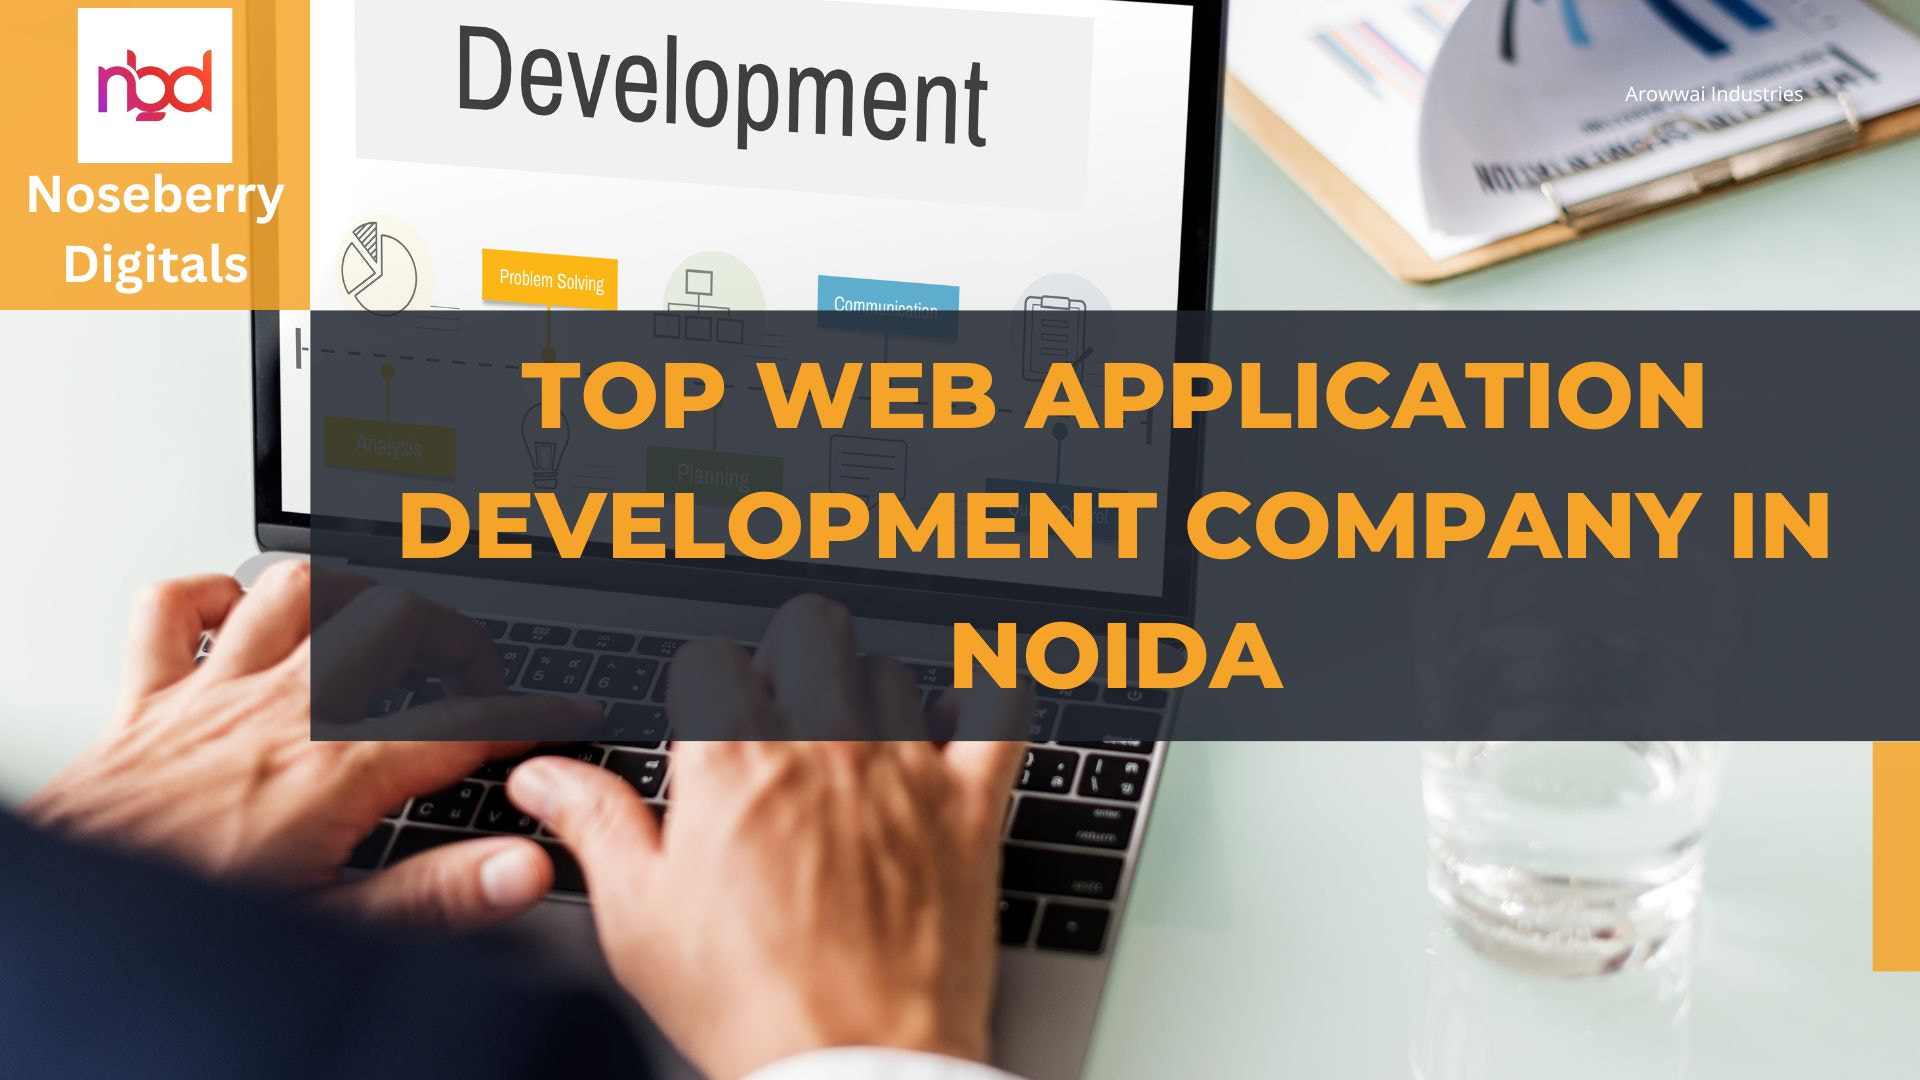 Top Web Application Development Company in Noida | Noseberry Digitals